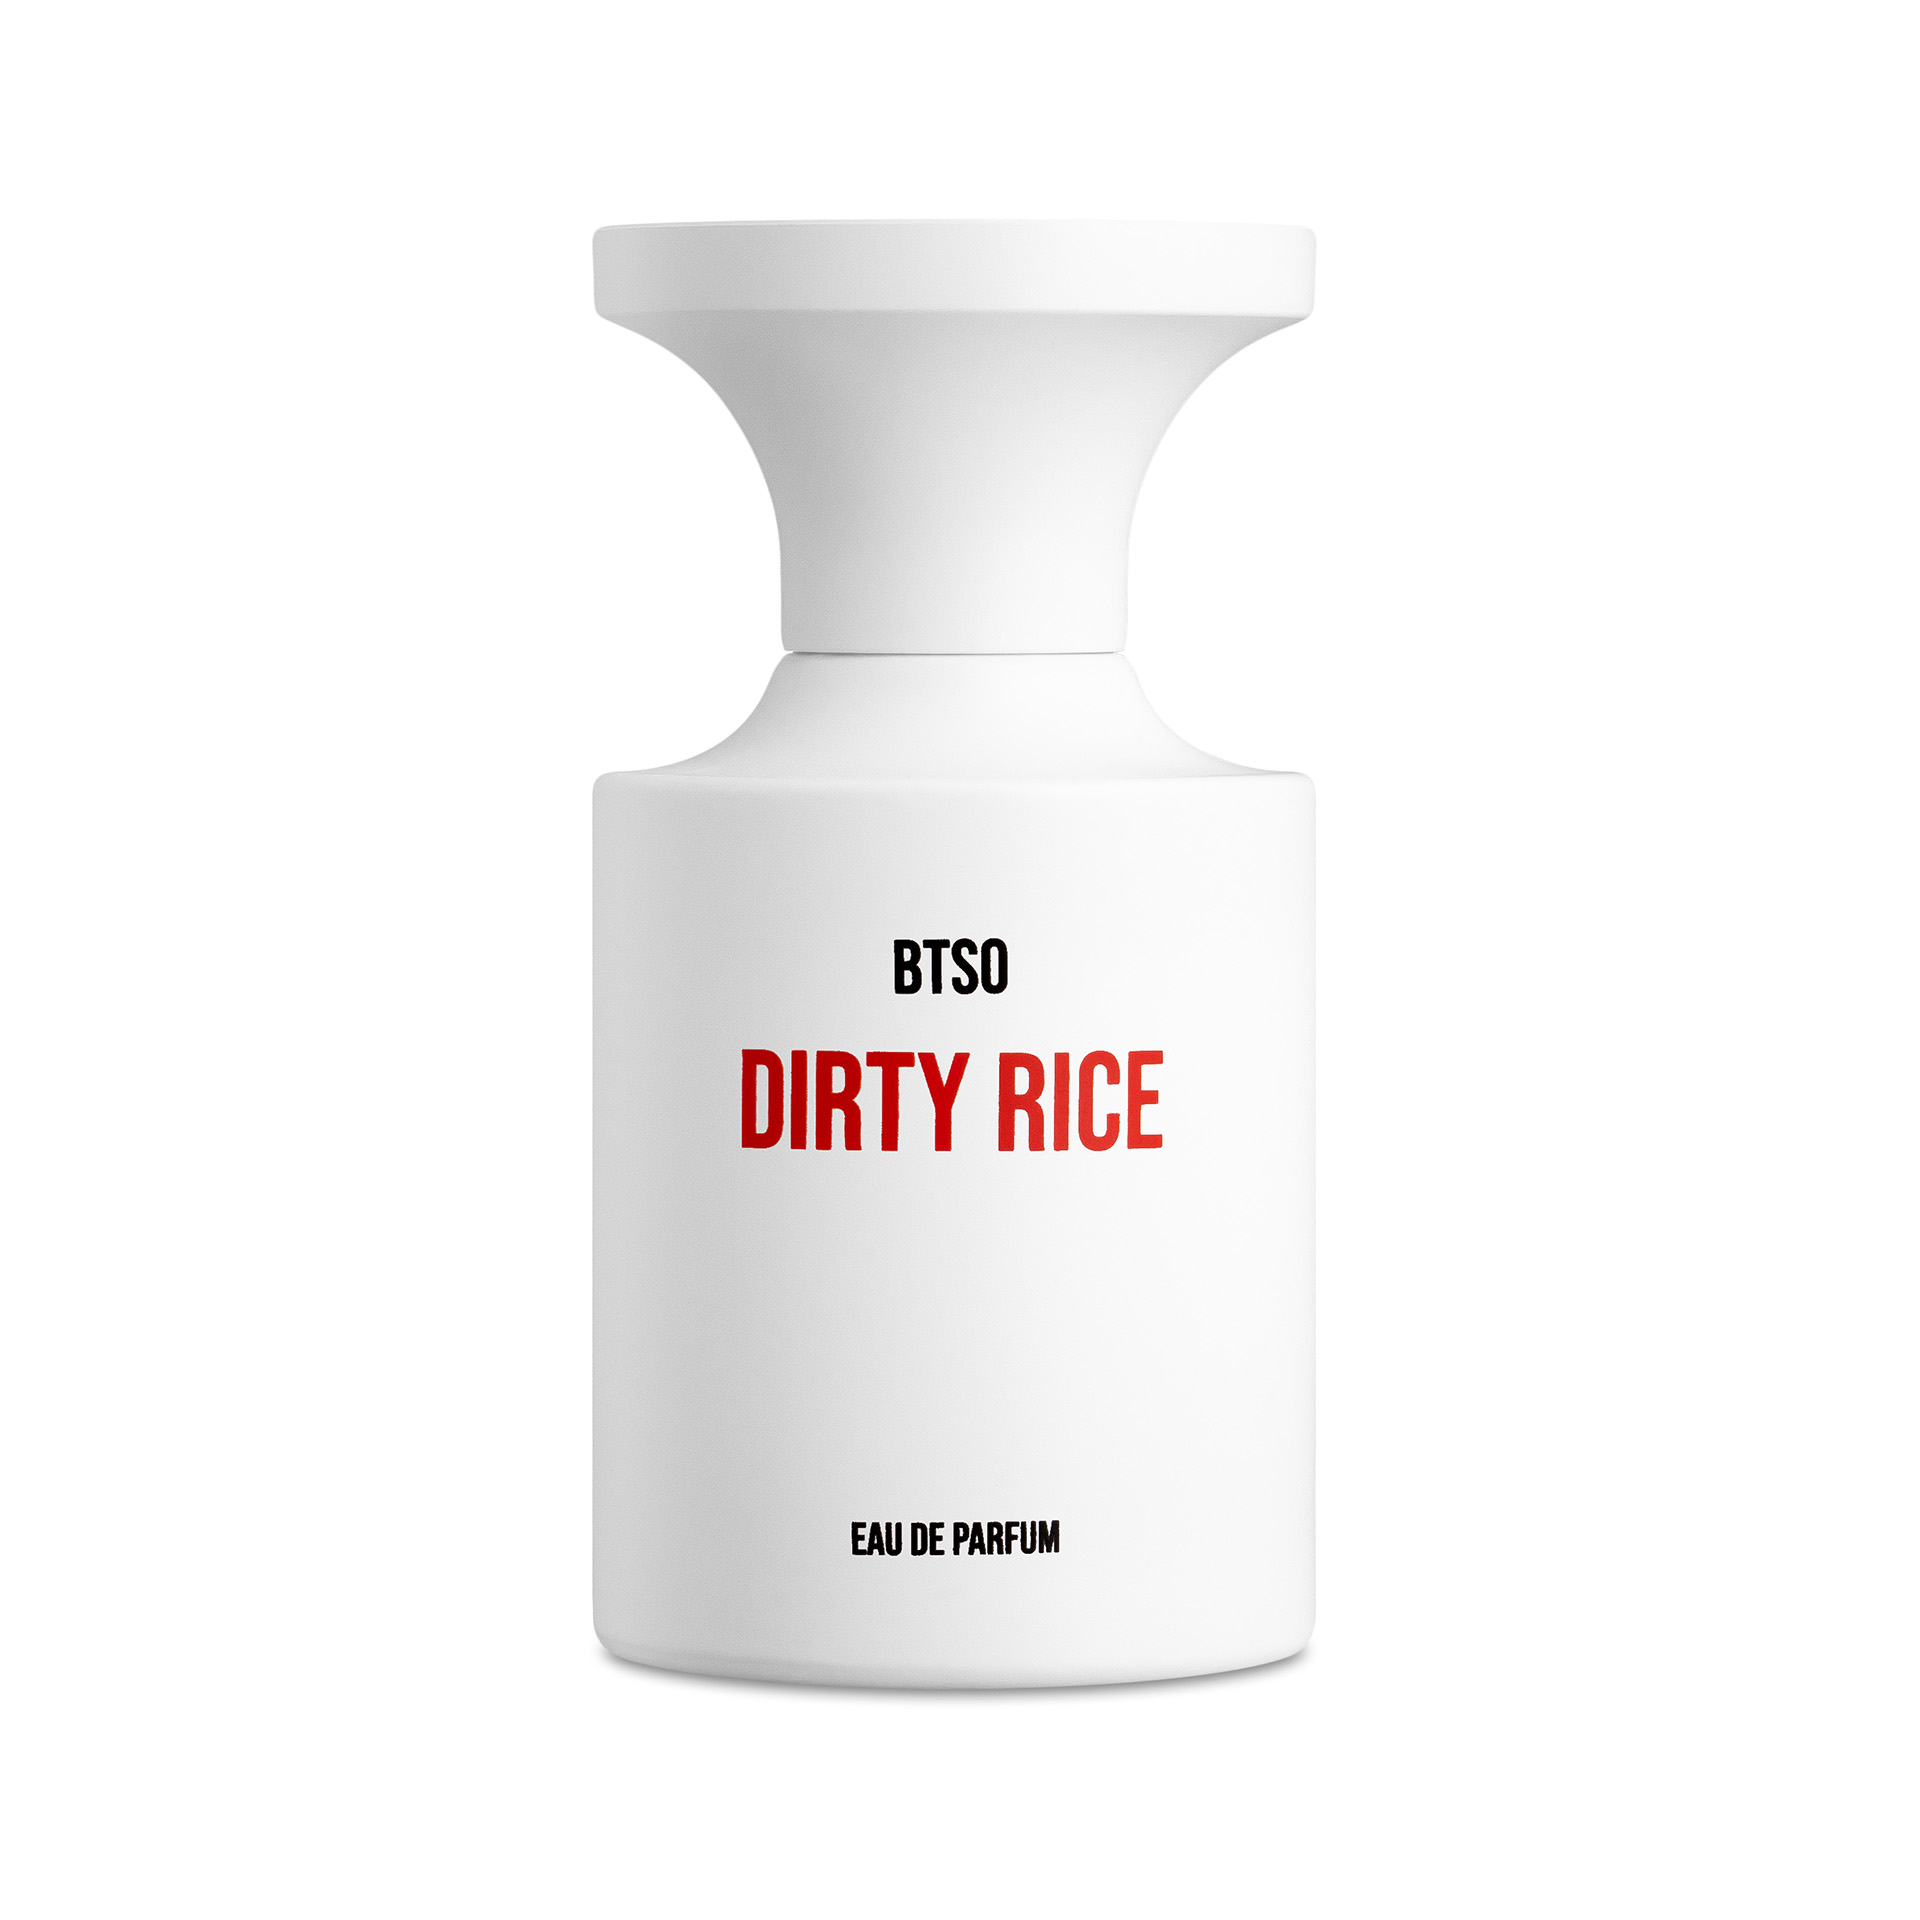 Dirty Rice